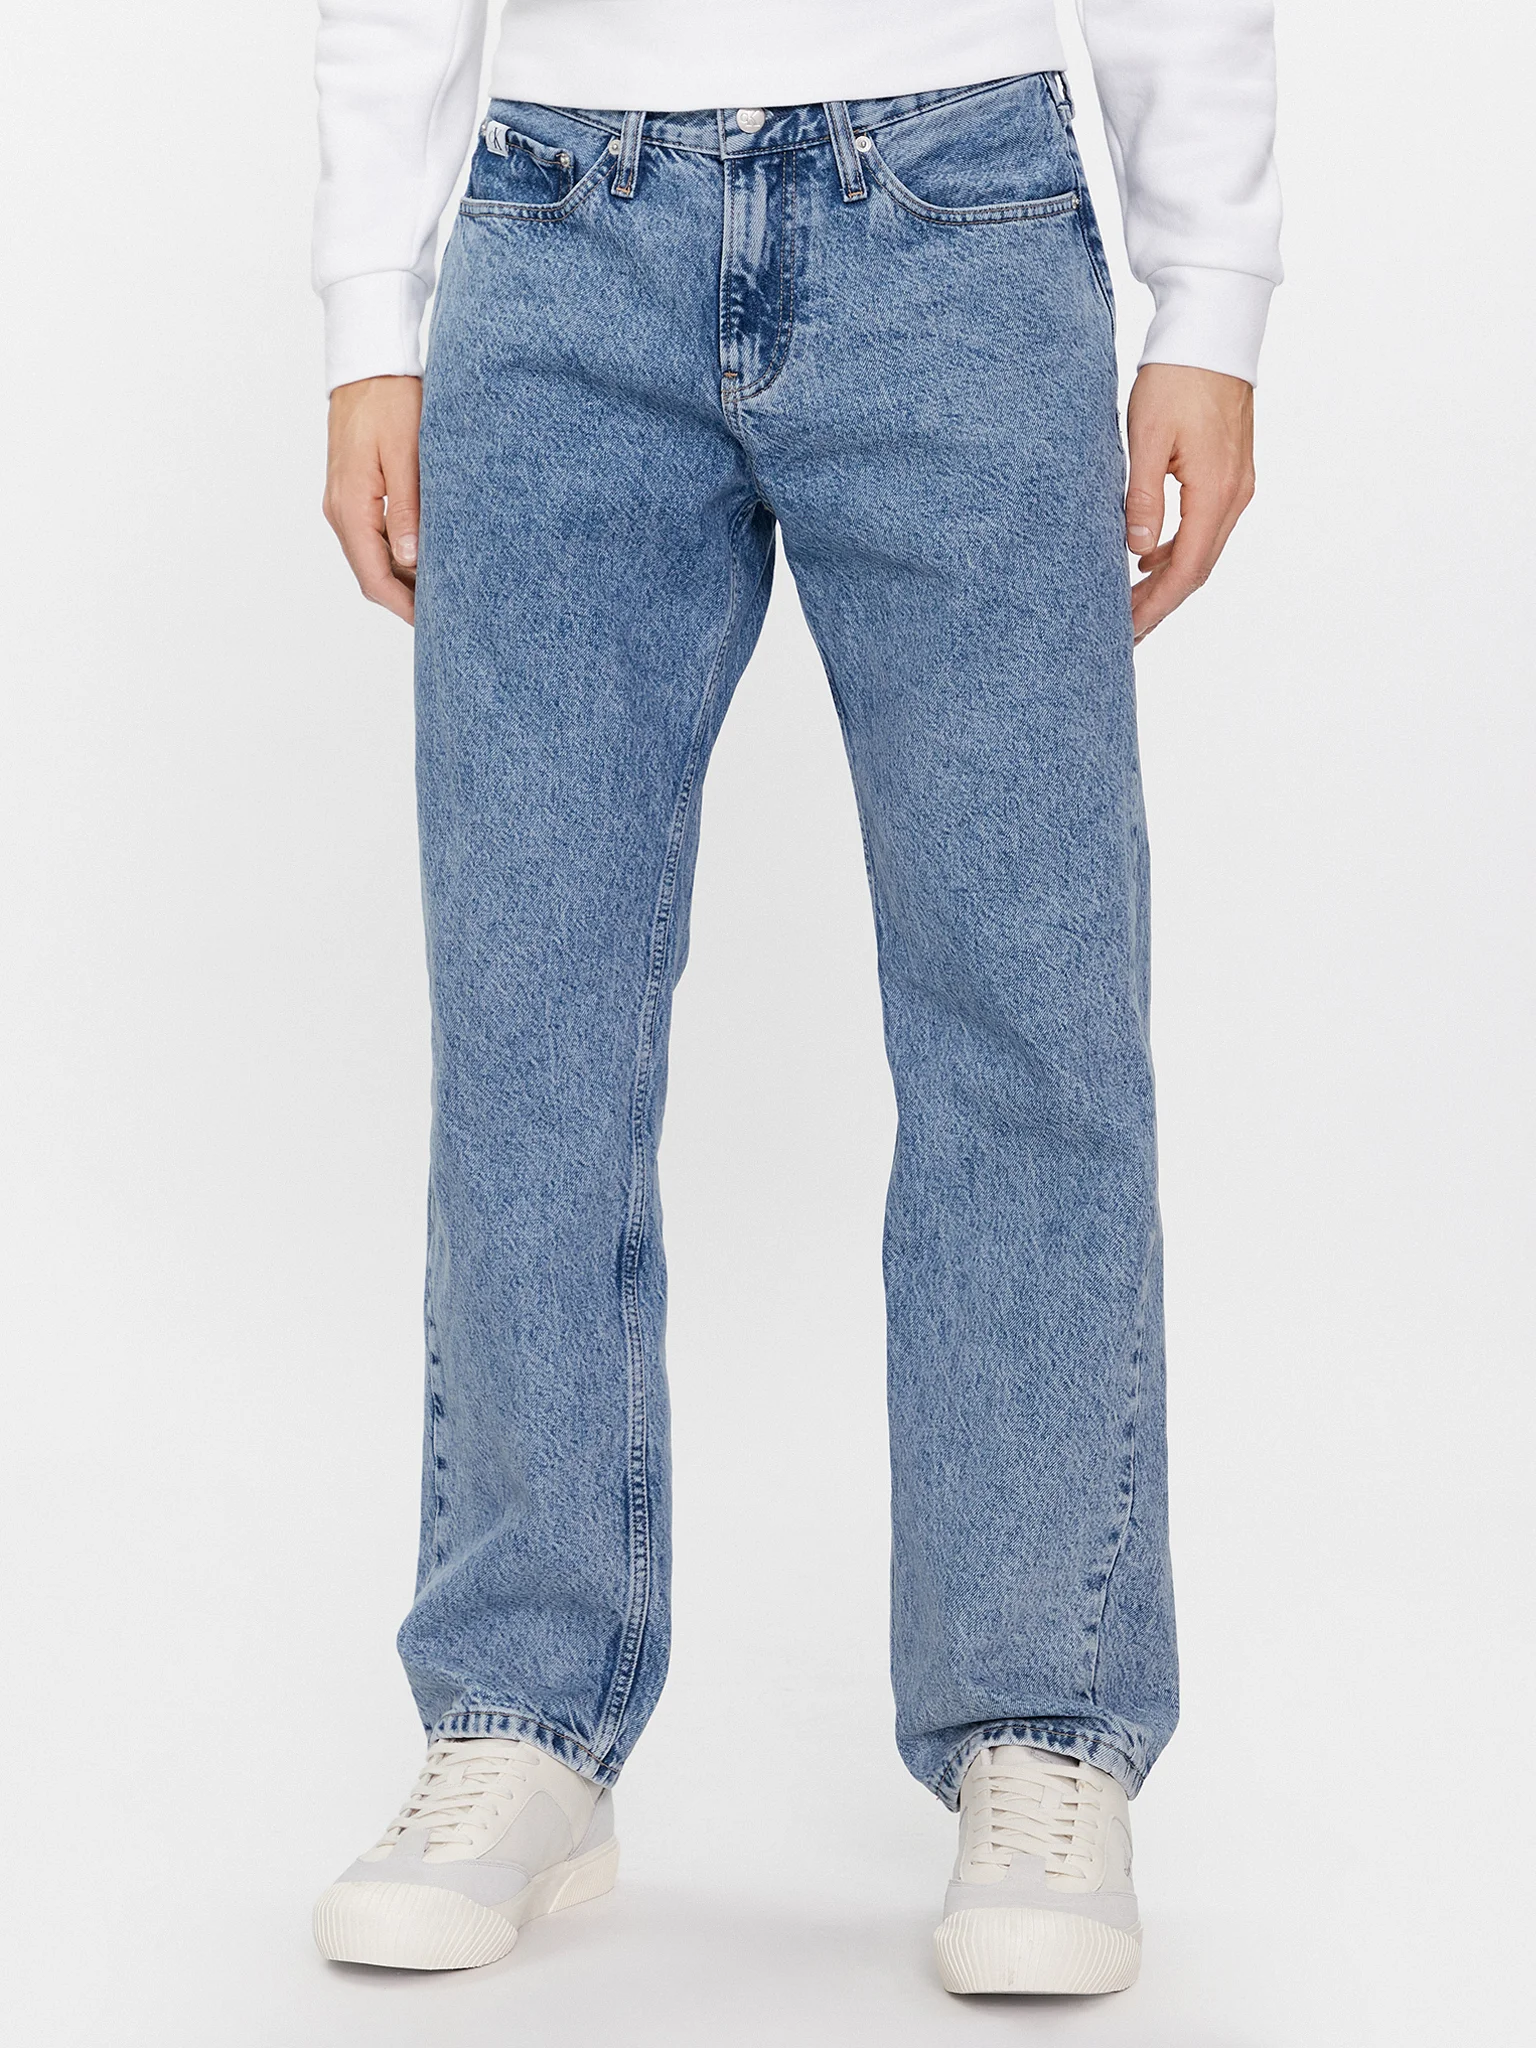 calvin-klein-jeans-jeans-90s-j30j324551-blau-straight-fit-0000303110420